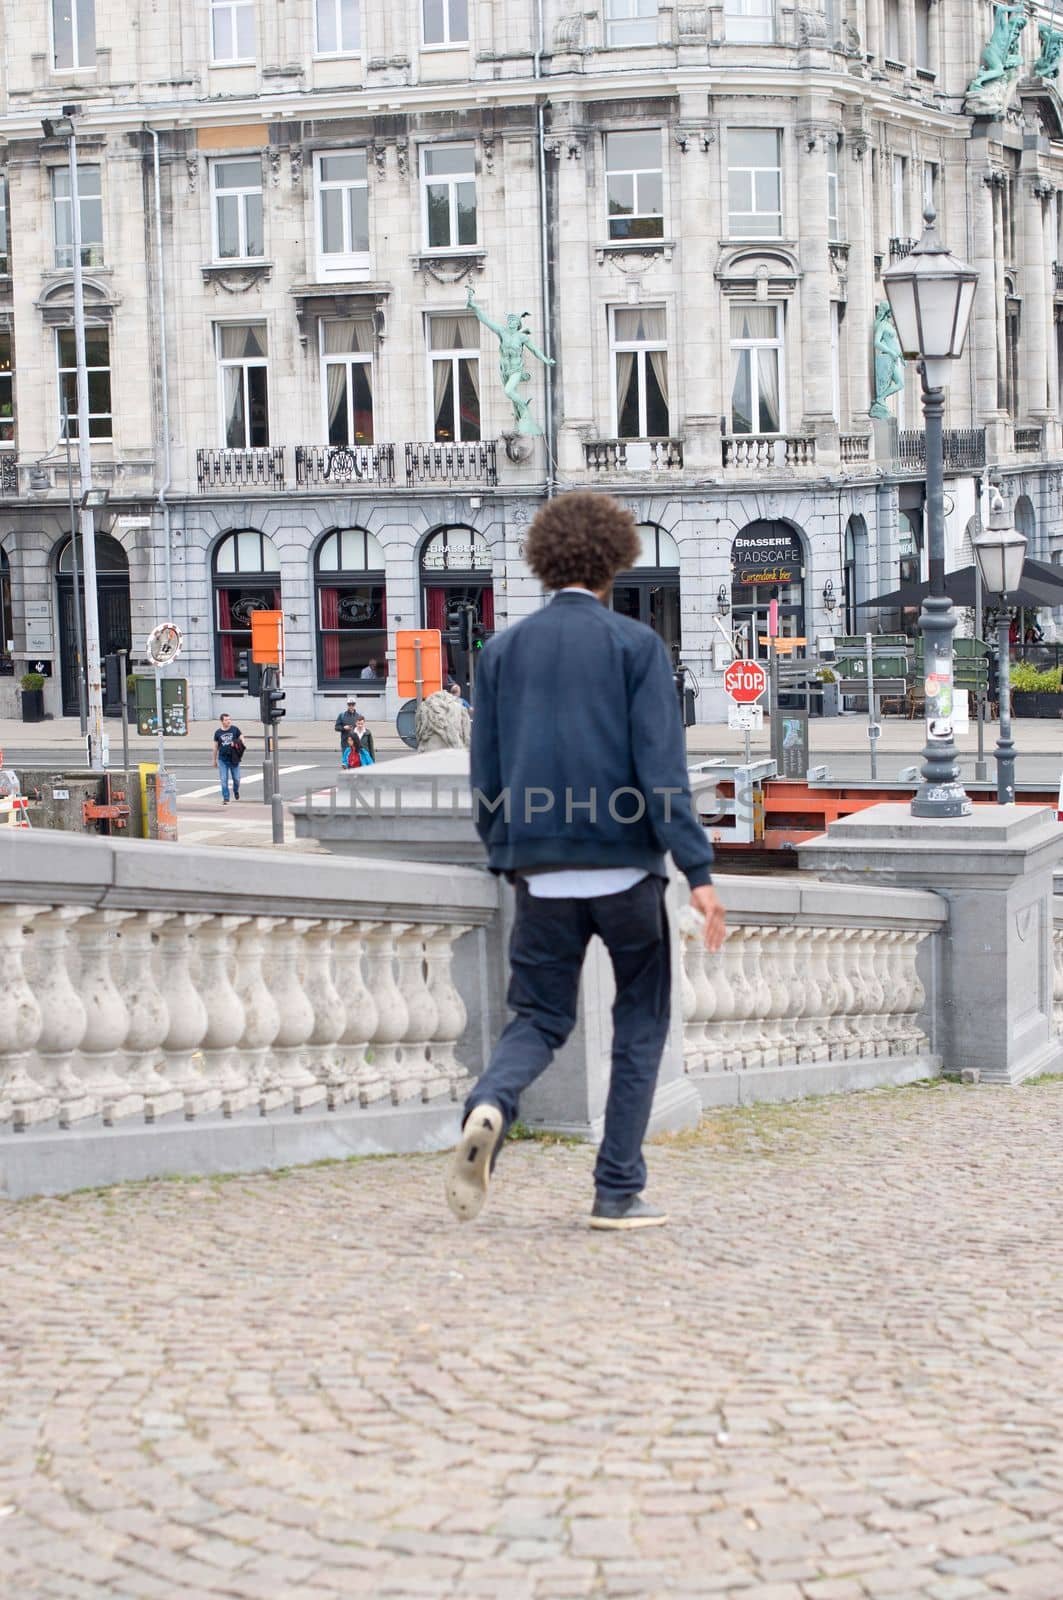 African American man with curly thick black hair, Antwerp, Belgium, 12 July 2019 by KaterinaDalemans